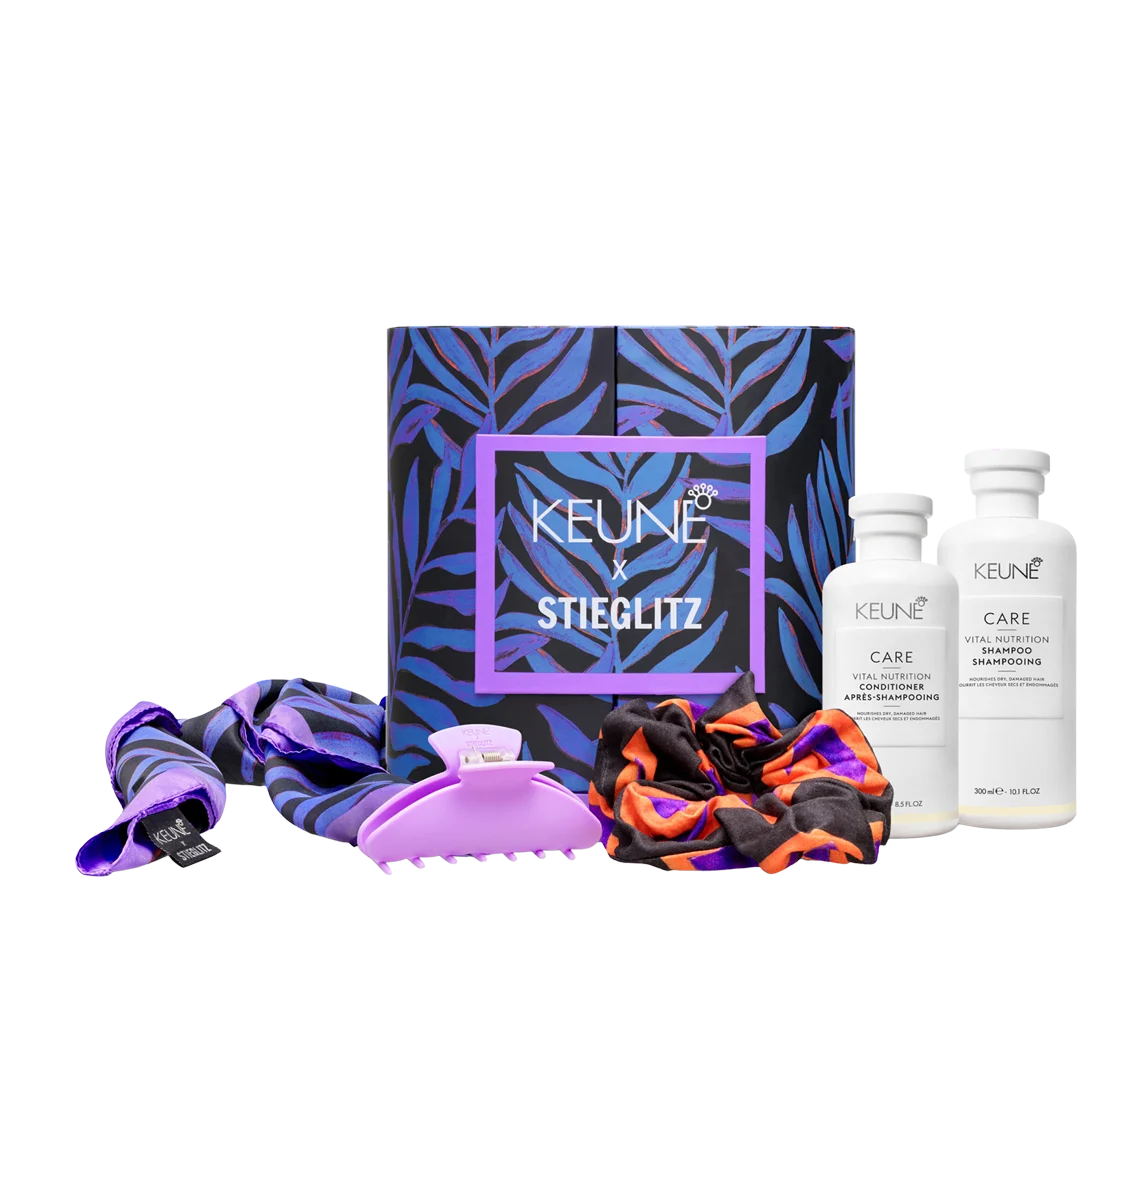 Image product gallery - Keune Stieglitz Giftbox - Vital Nutrition